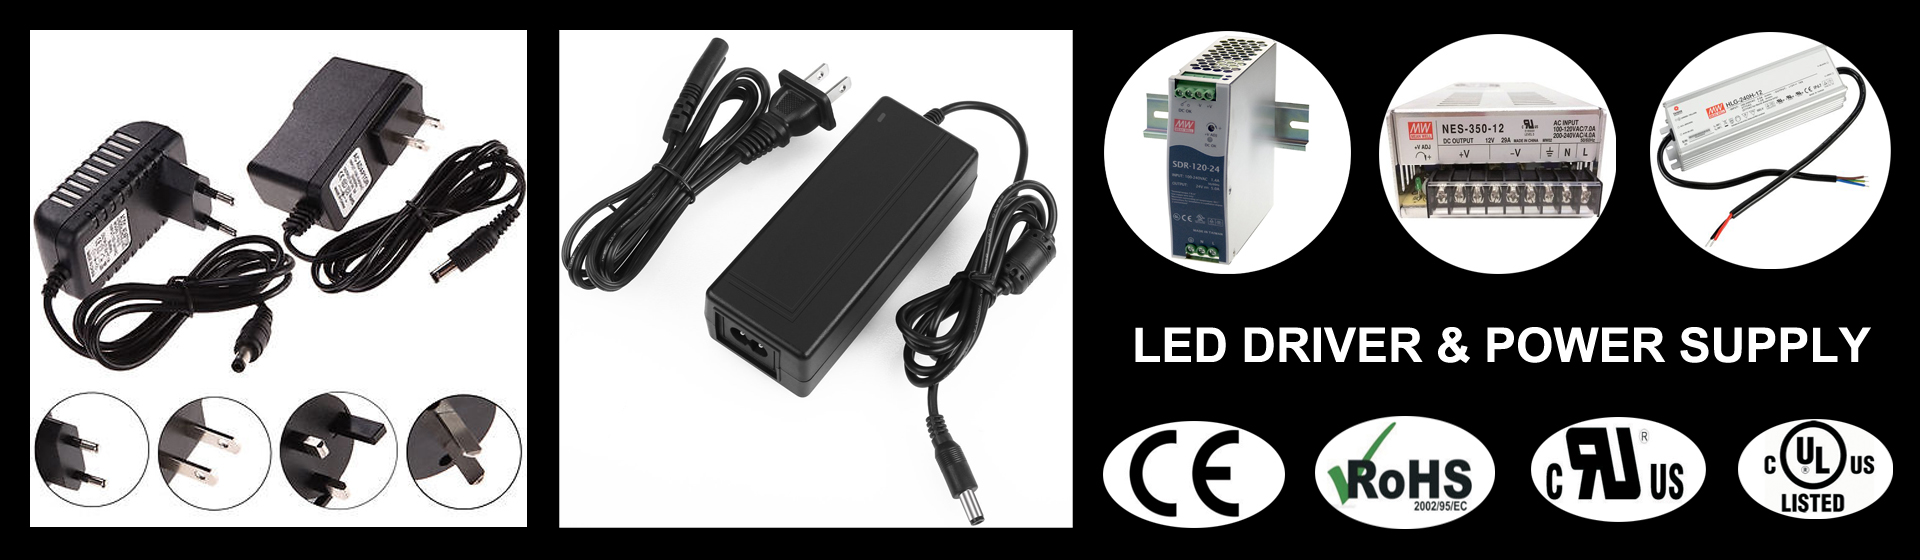 led driver - LED Power Supply